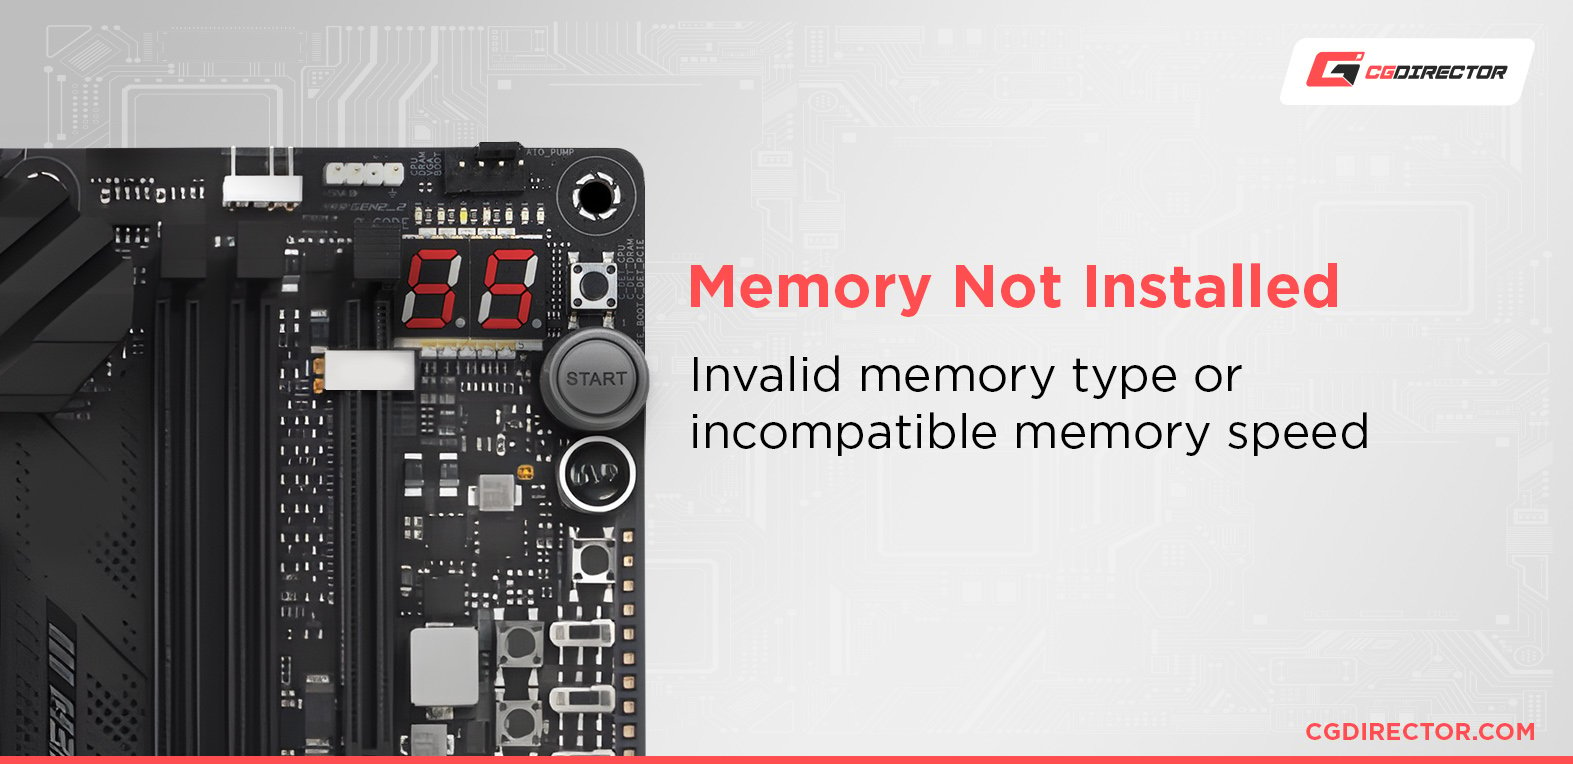 ASUS Error Code 55 - Memory Not Installed